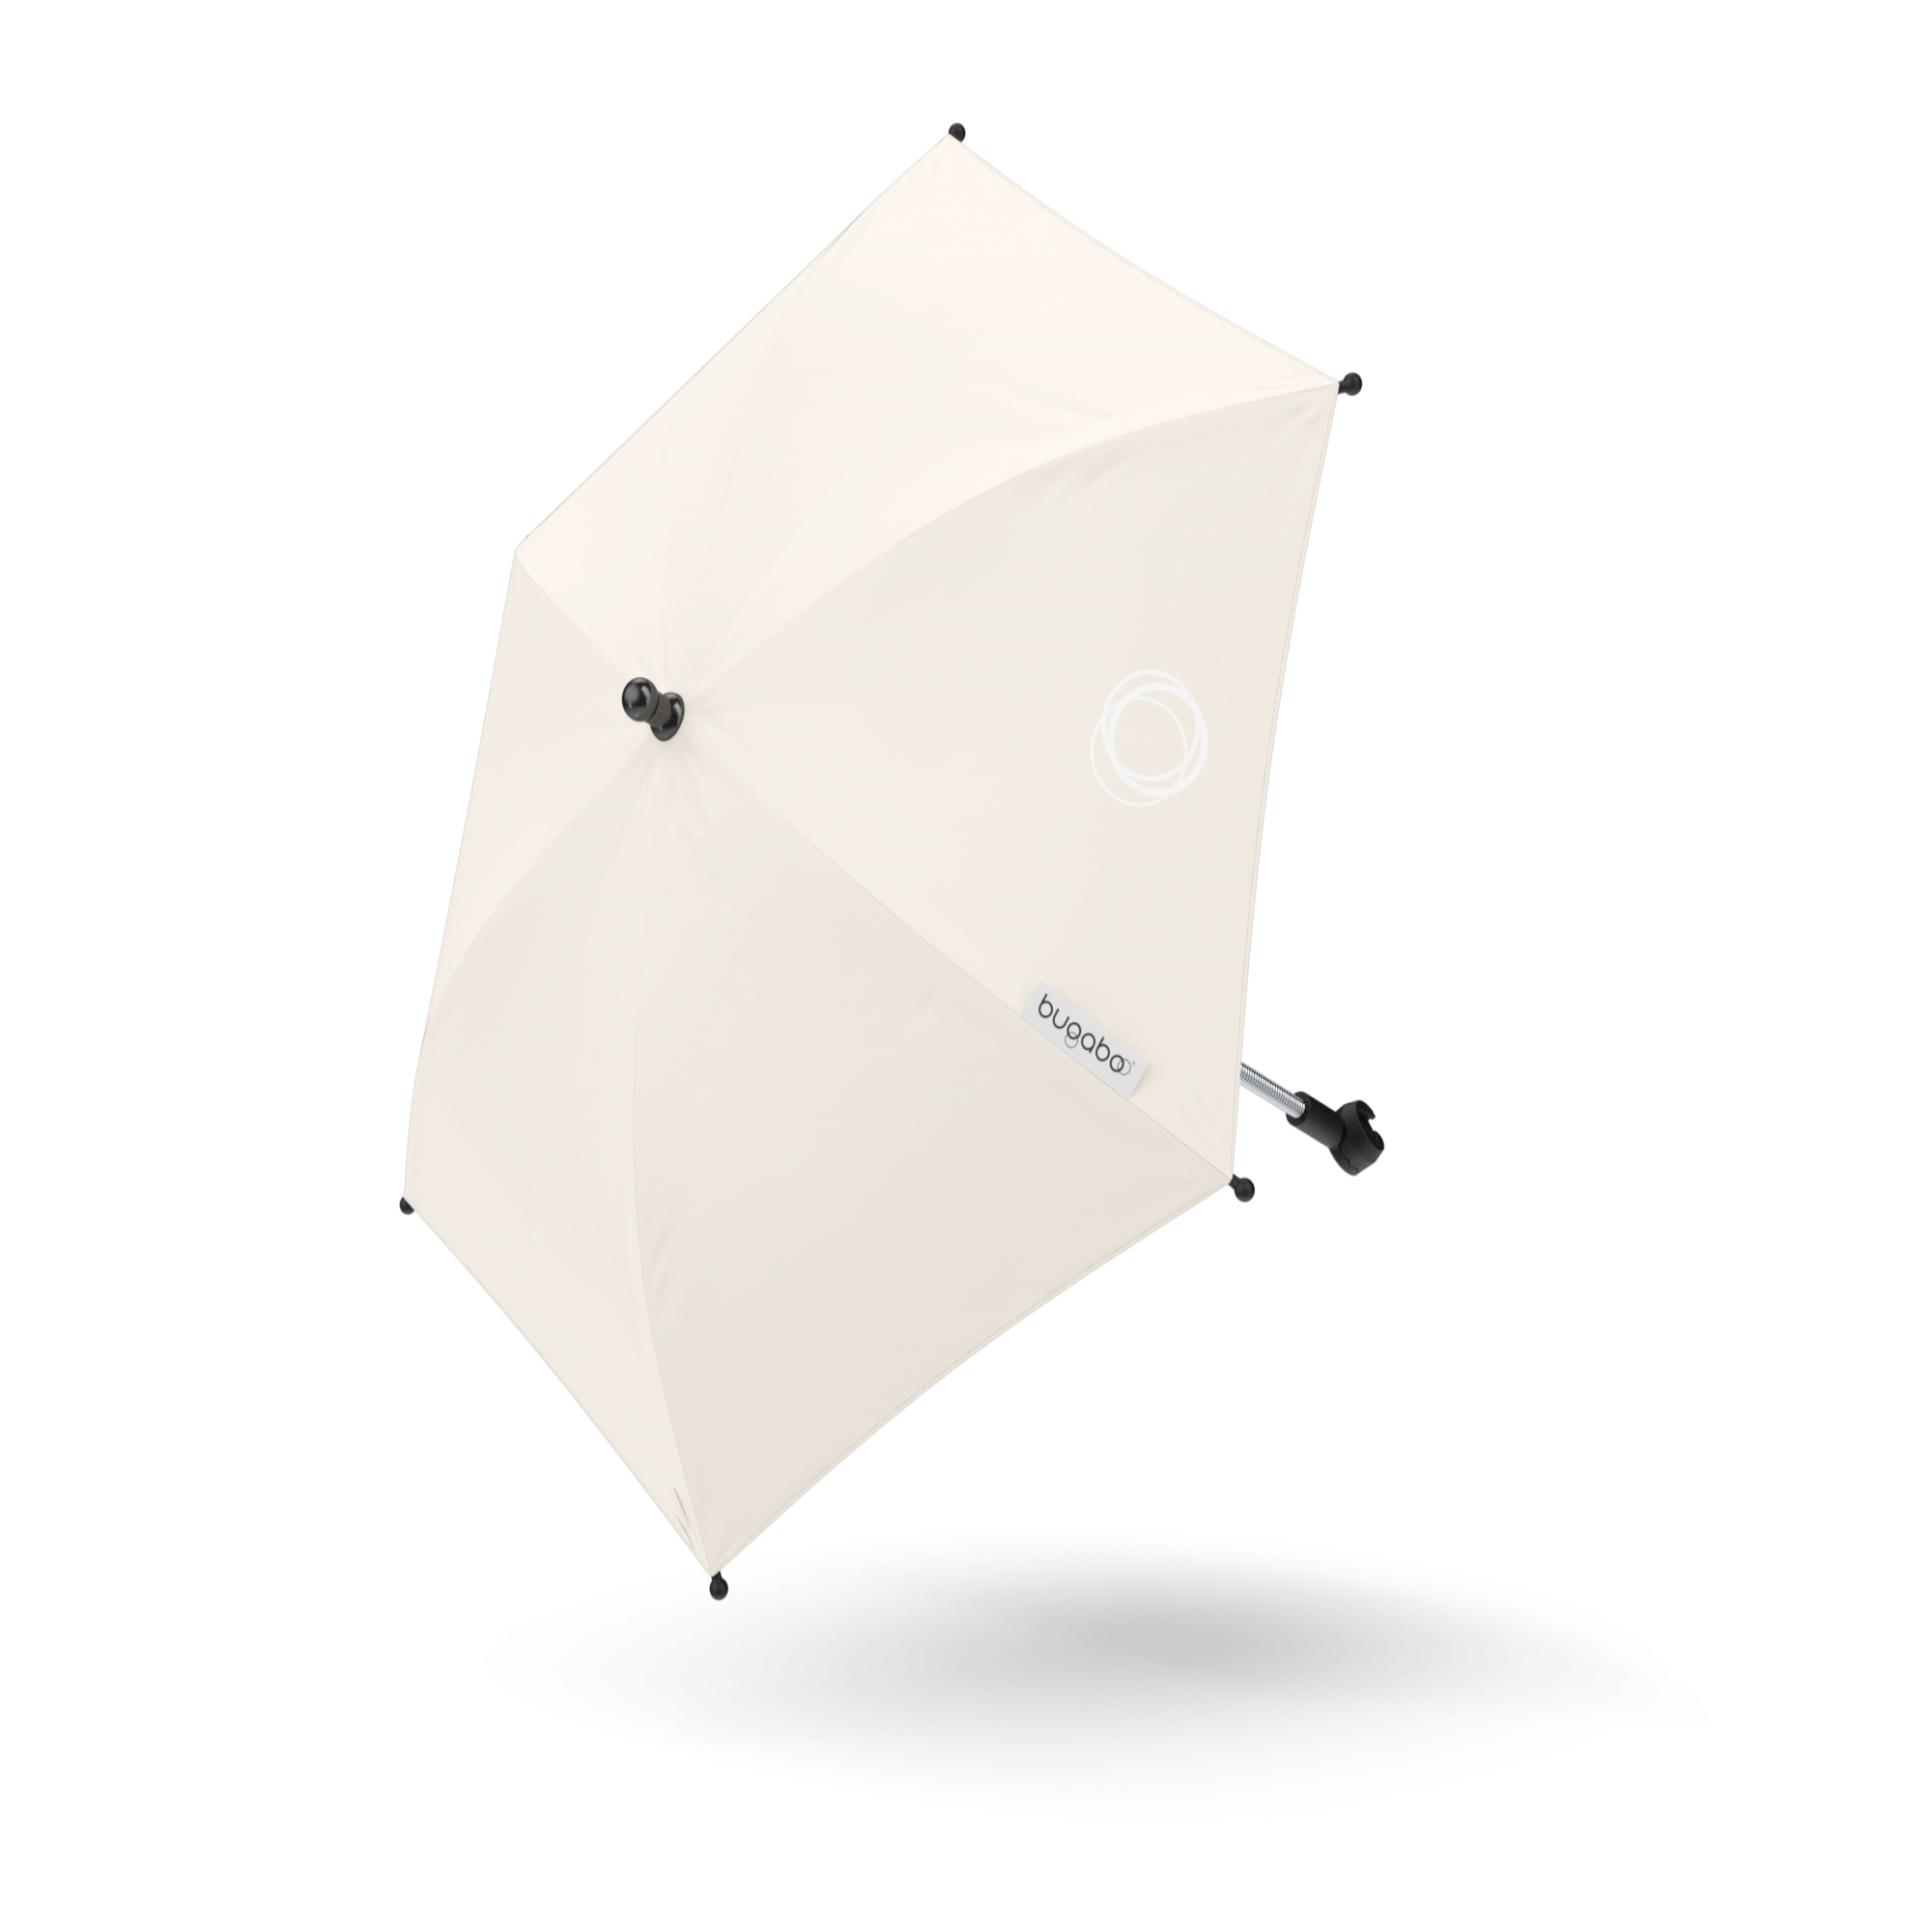 bugaboo parasol fresh white